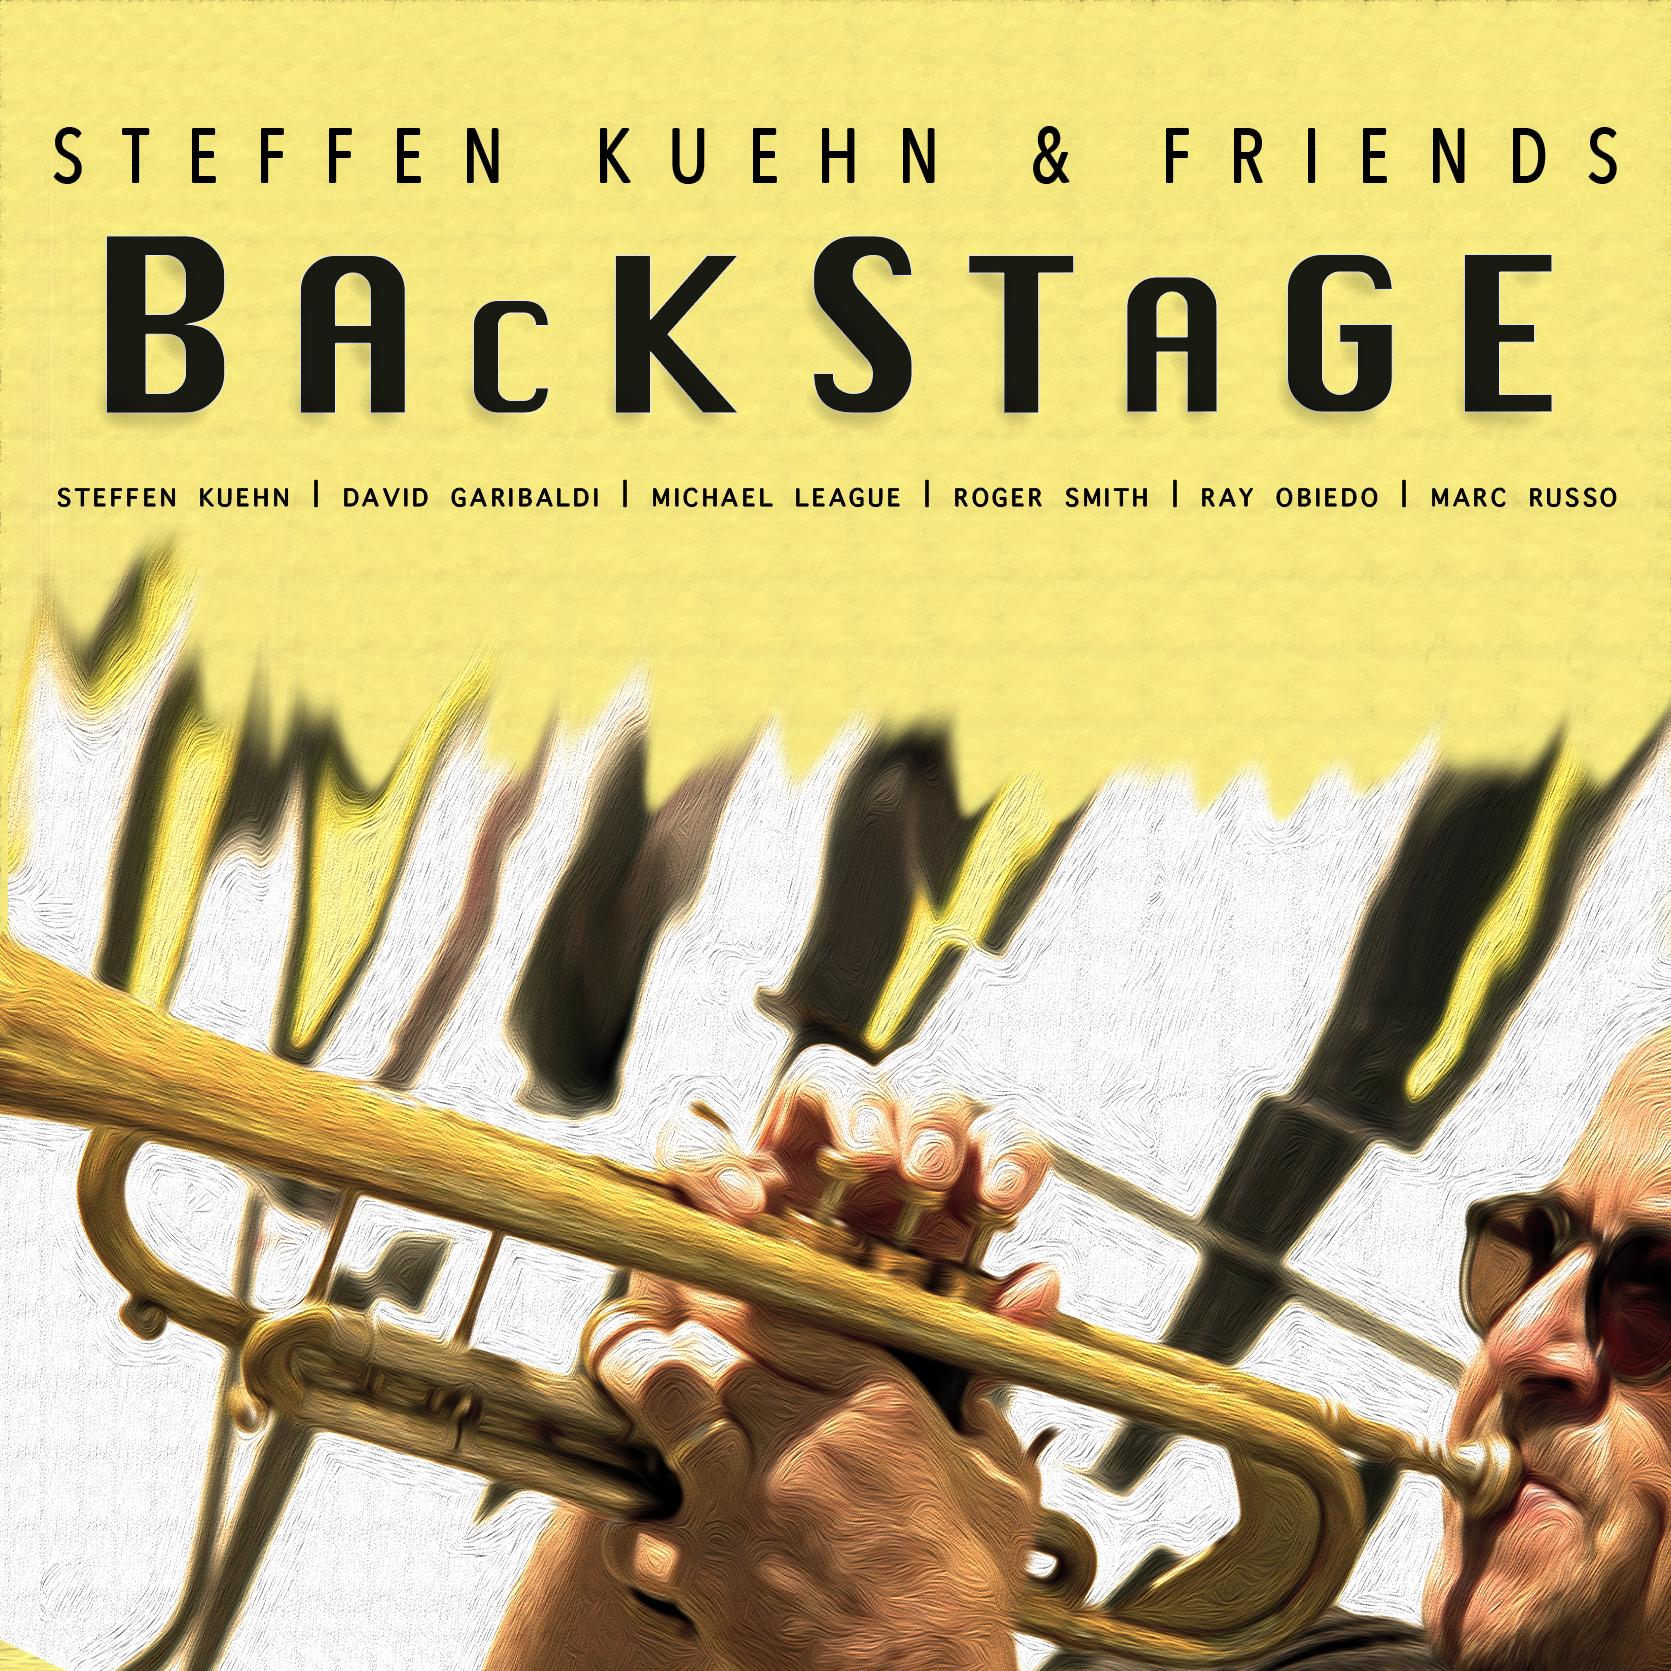 Backstage Cover Art - Steffen Kuehn 2.png